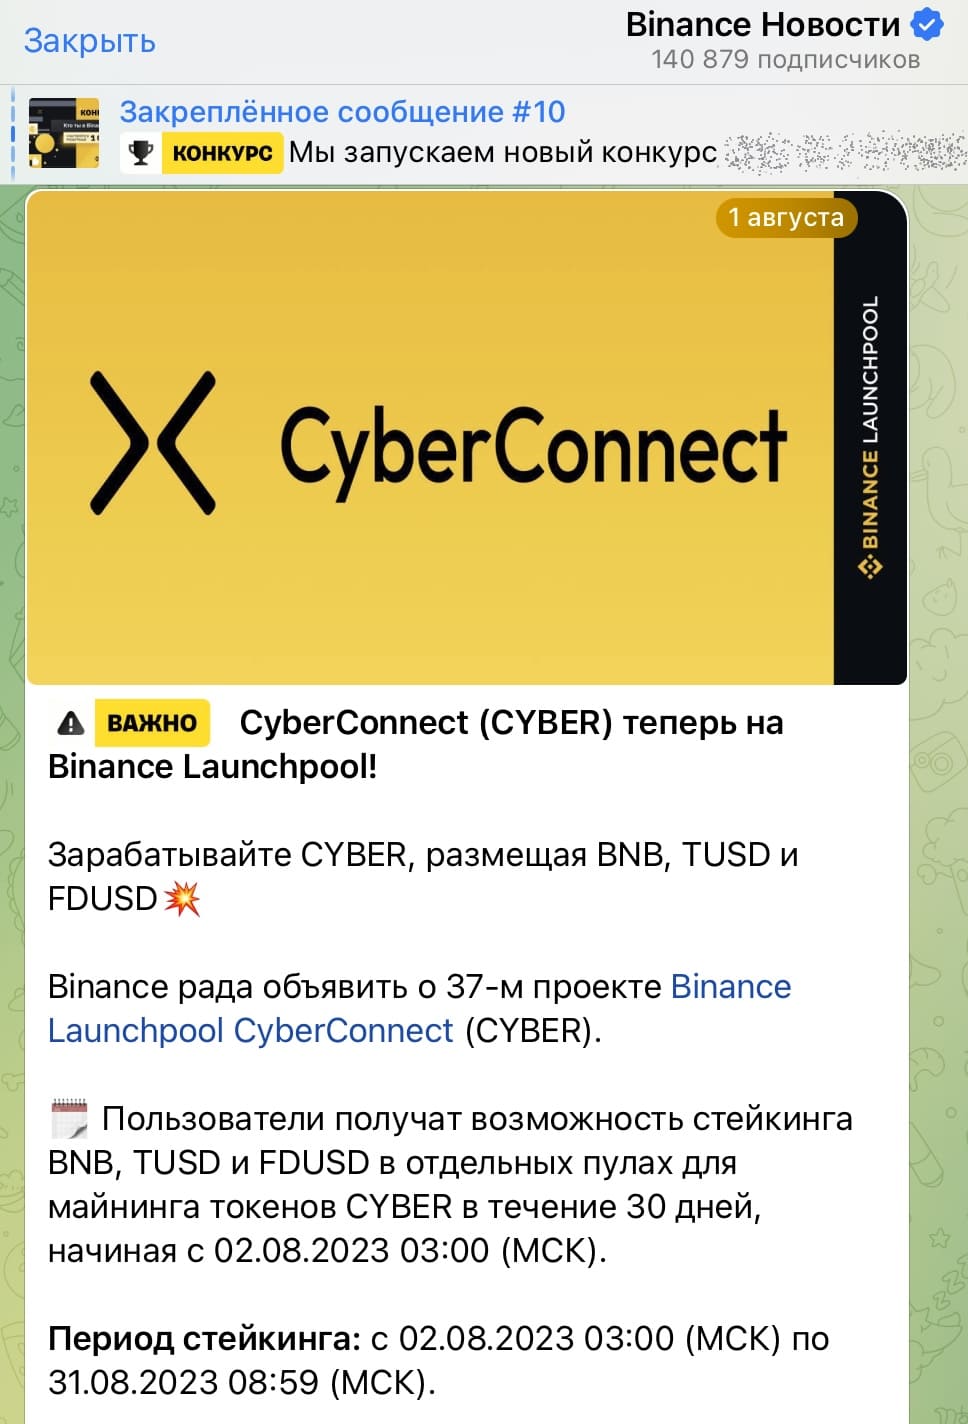 Объявление о лаунчпуле в телеграм-канале Binance Новости